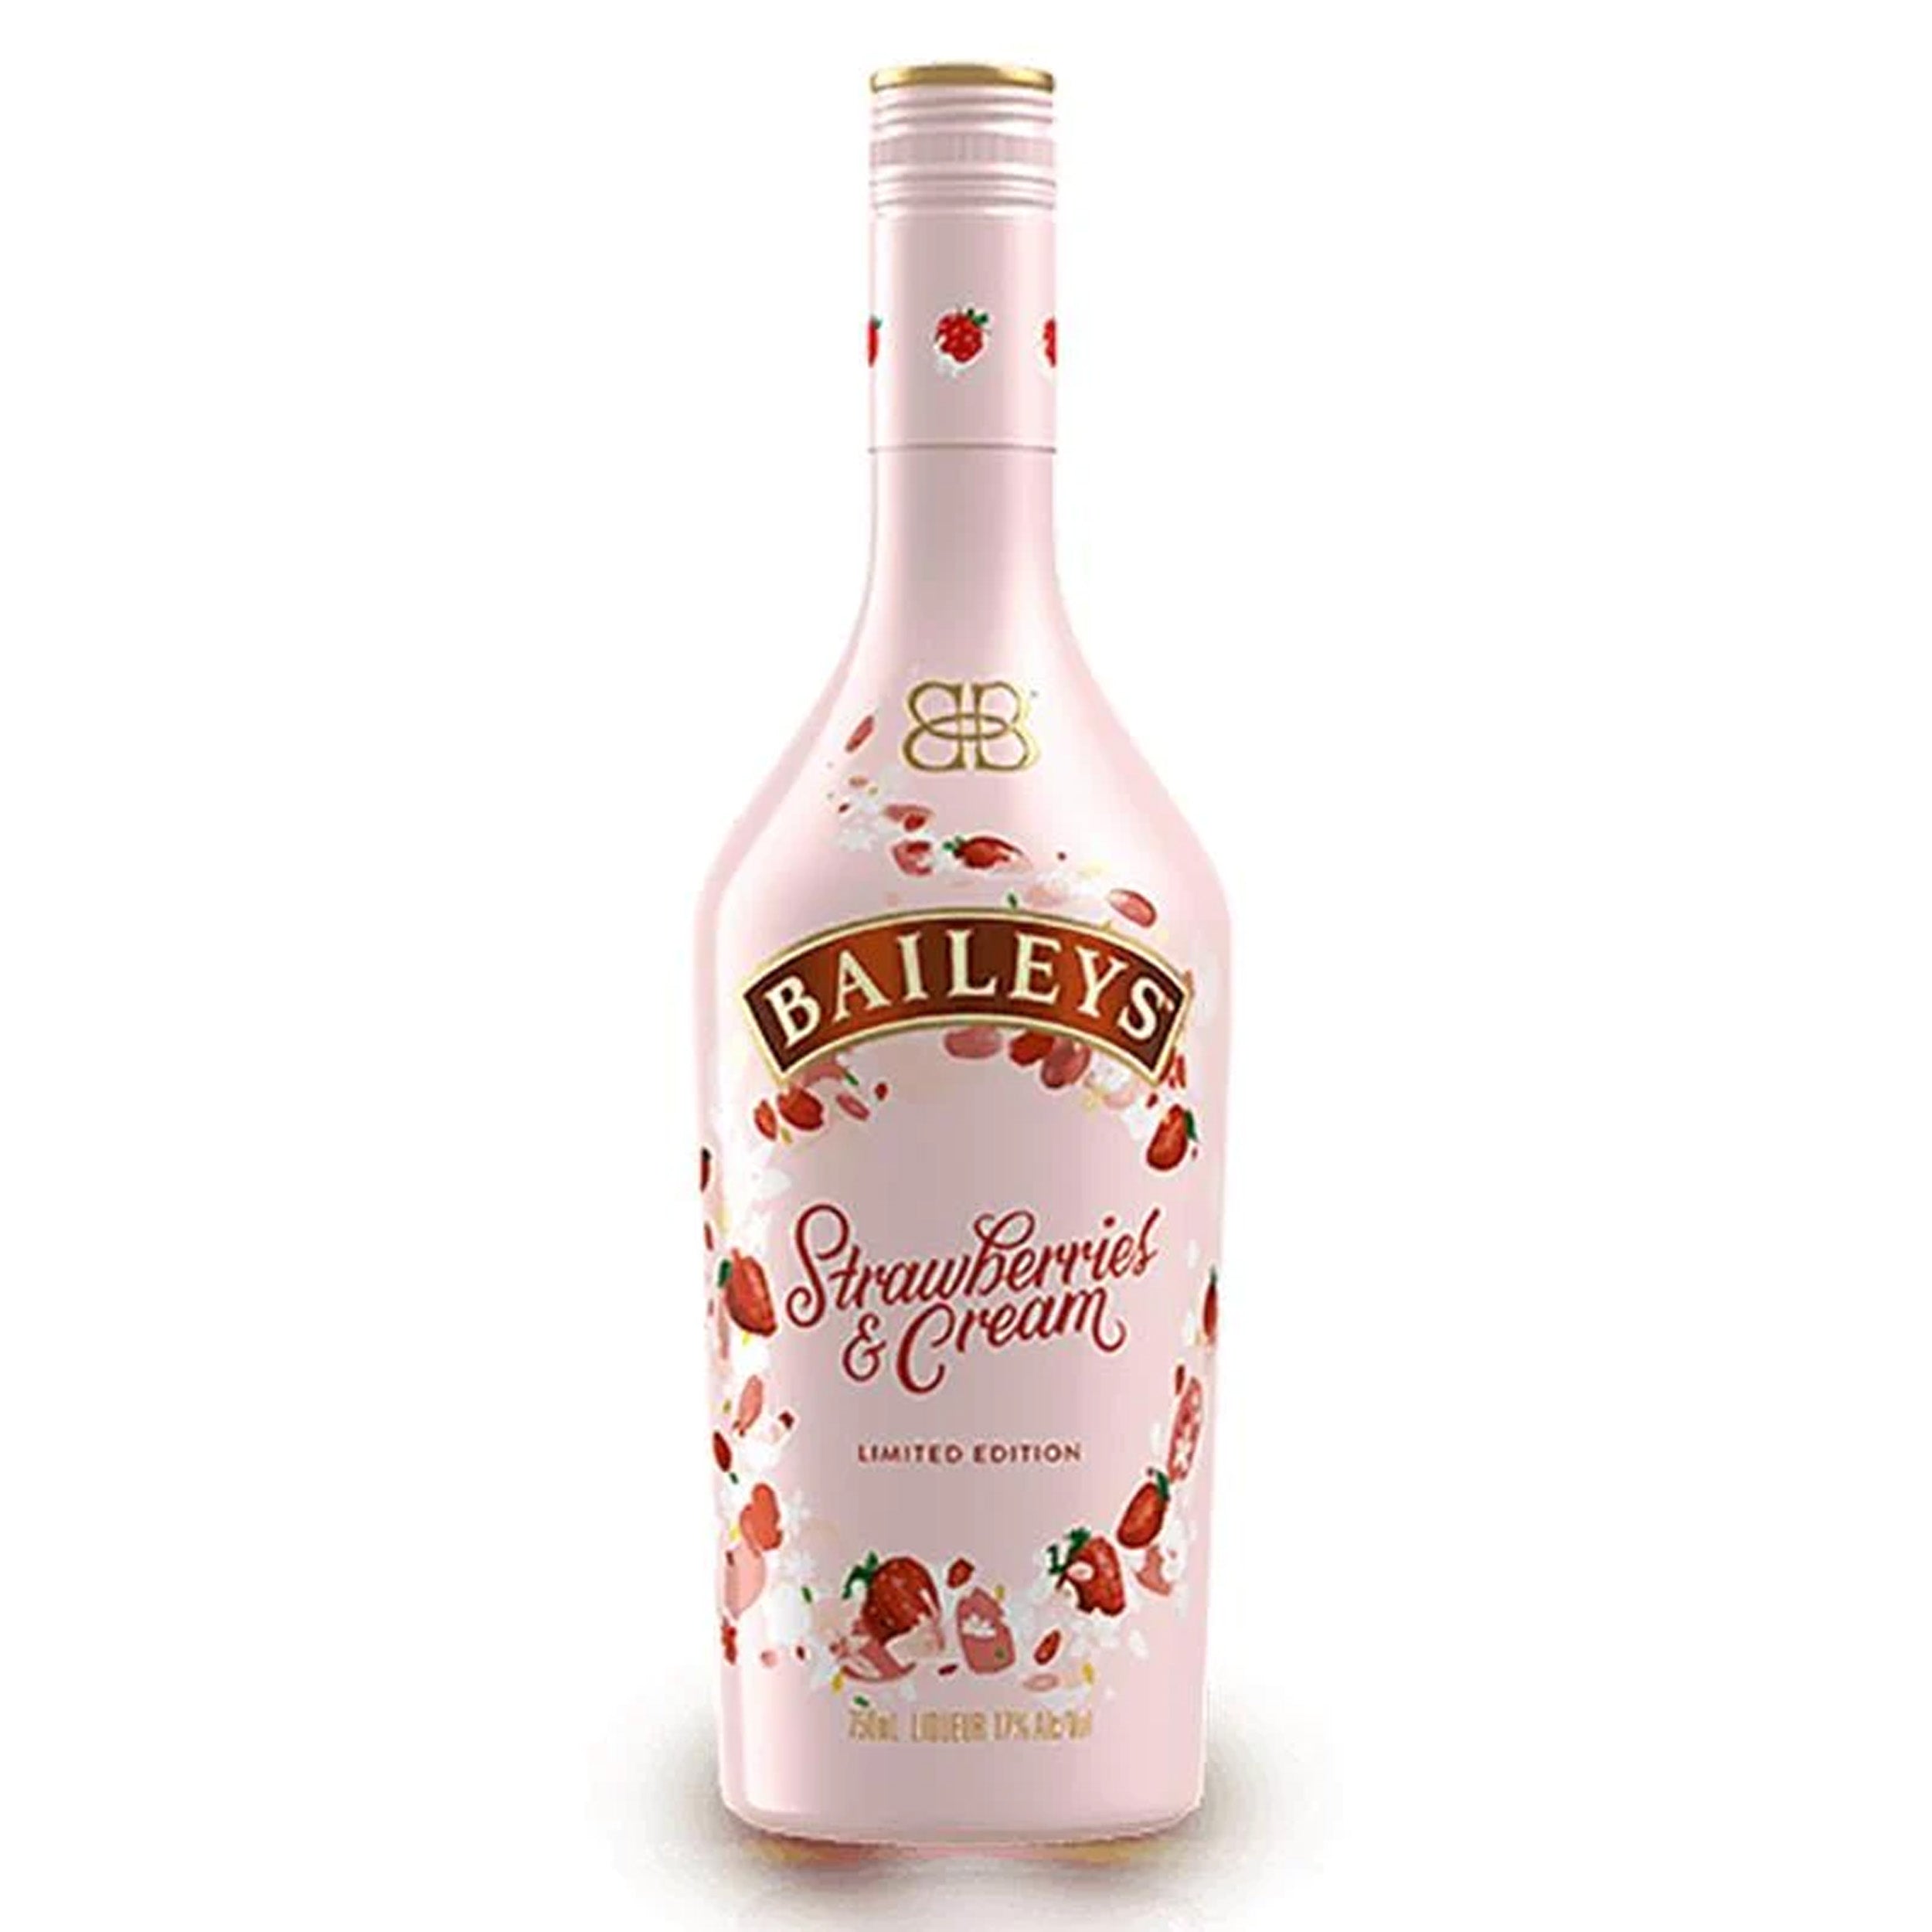 Bailey's Strawberries & Cream Liqueur